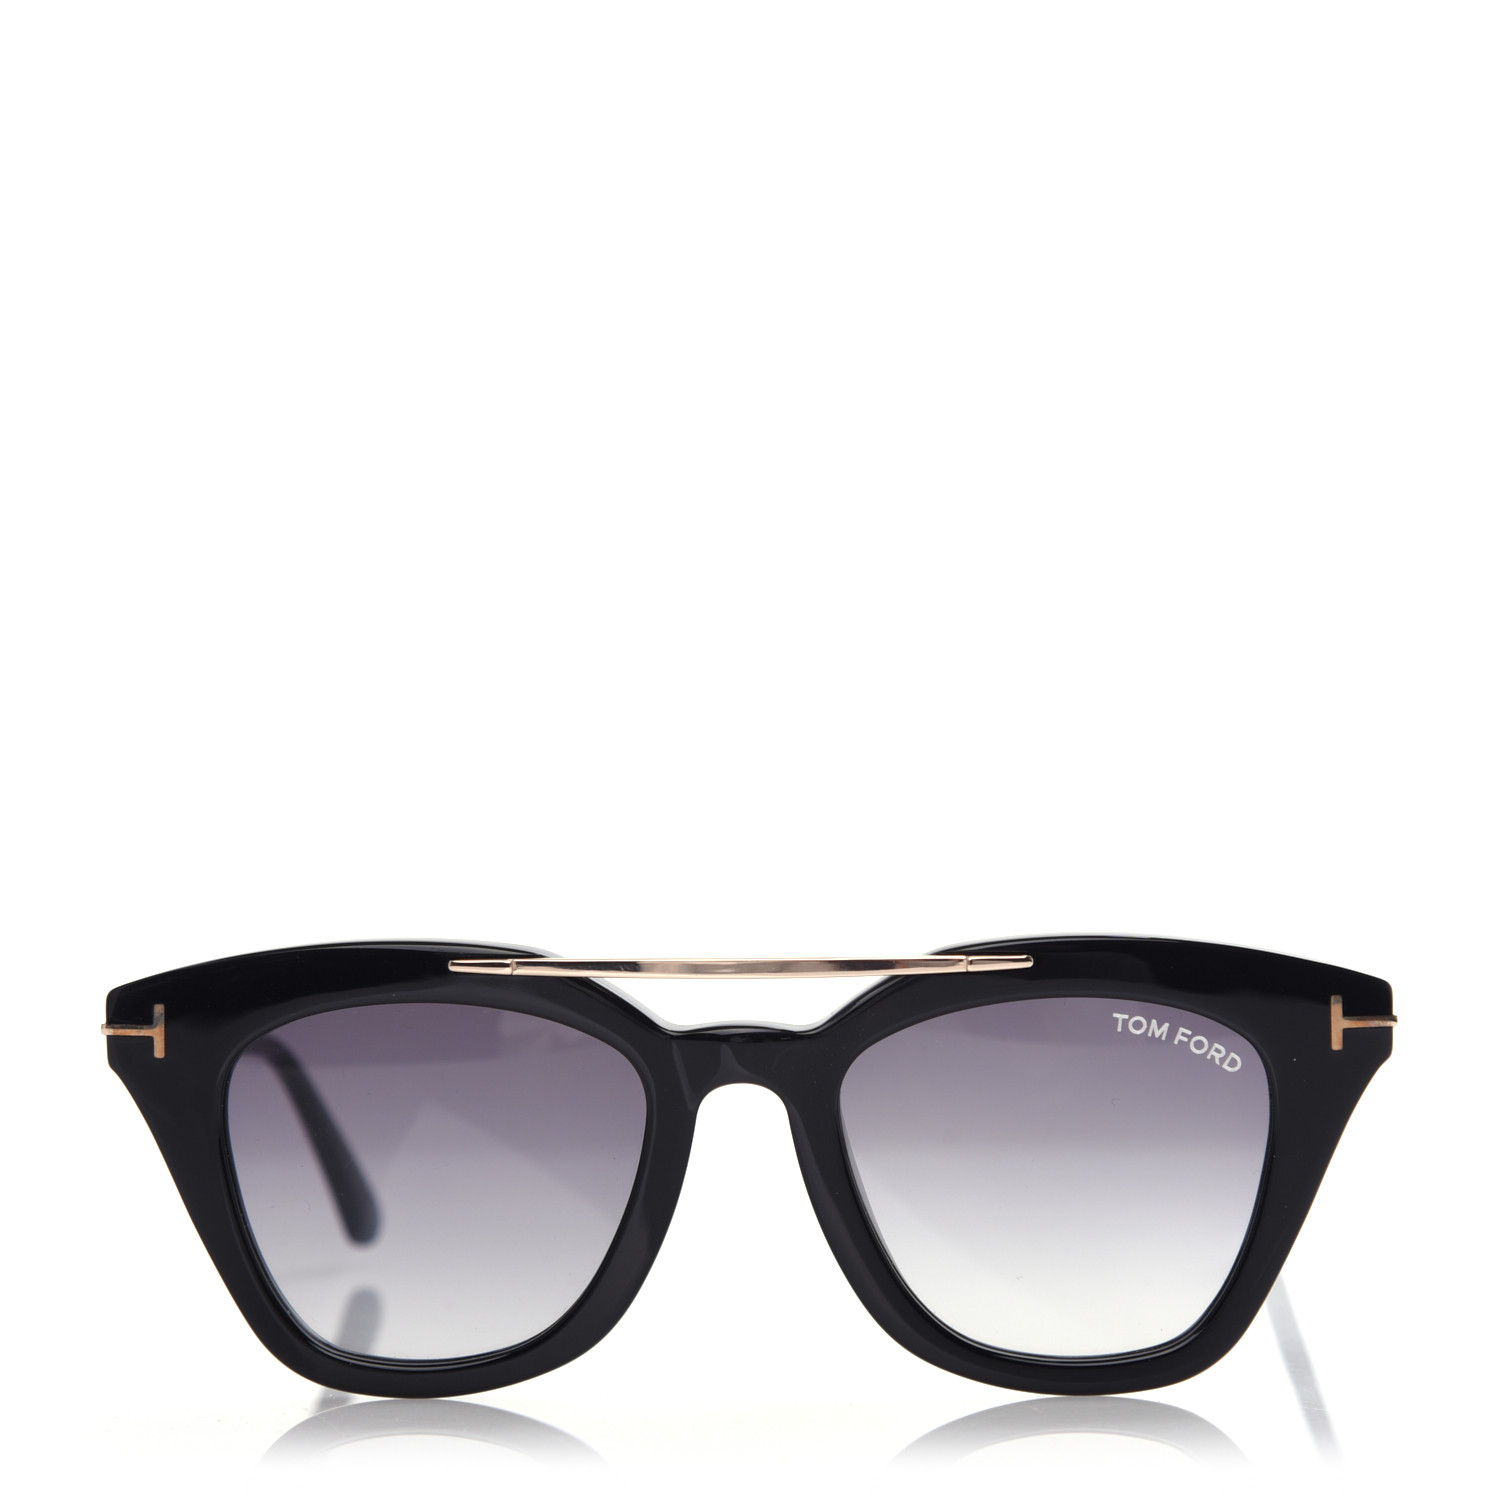 anna sunglasses tom ford,cheap - OFF 58% 